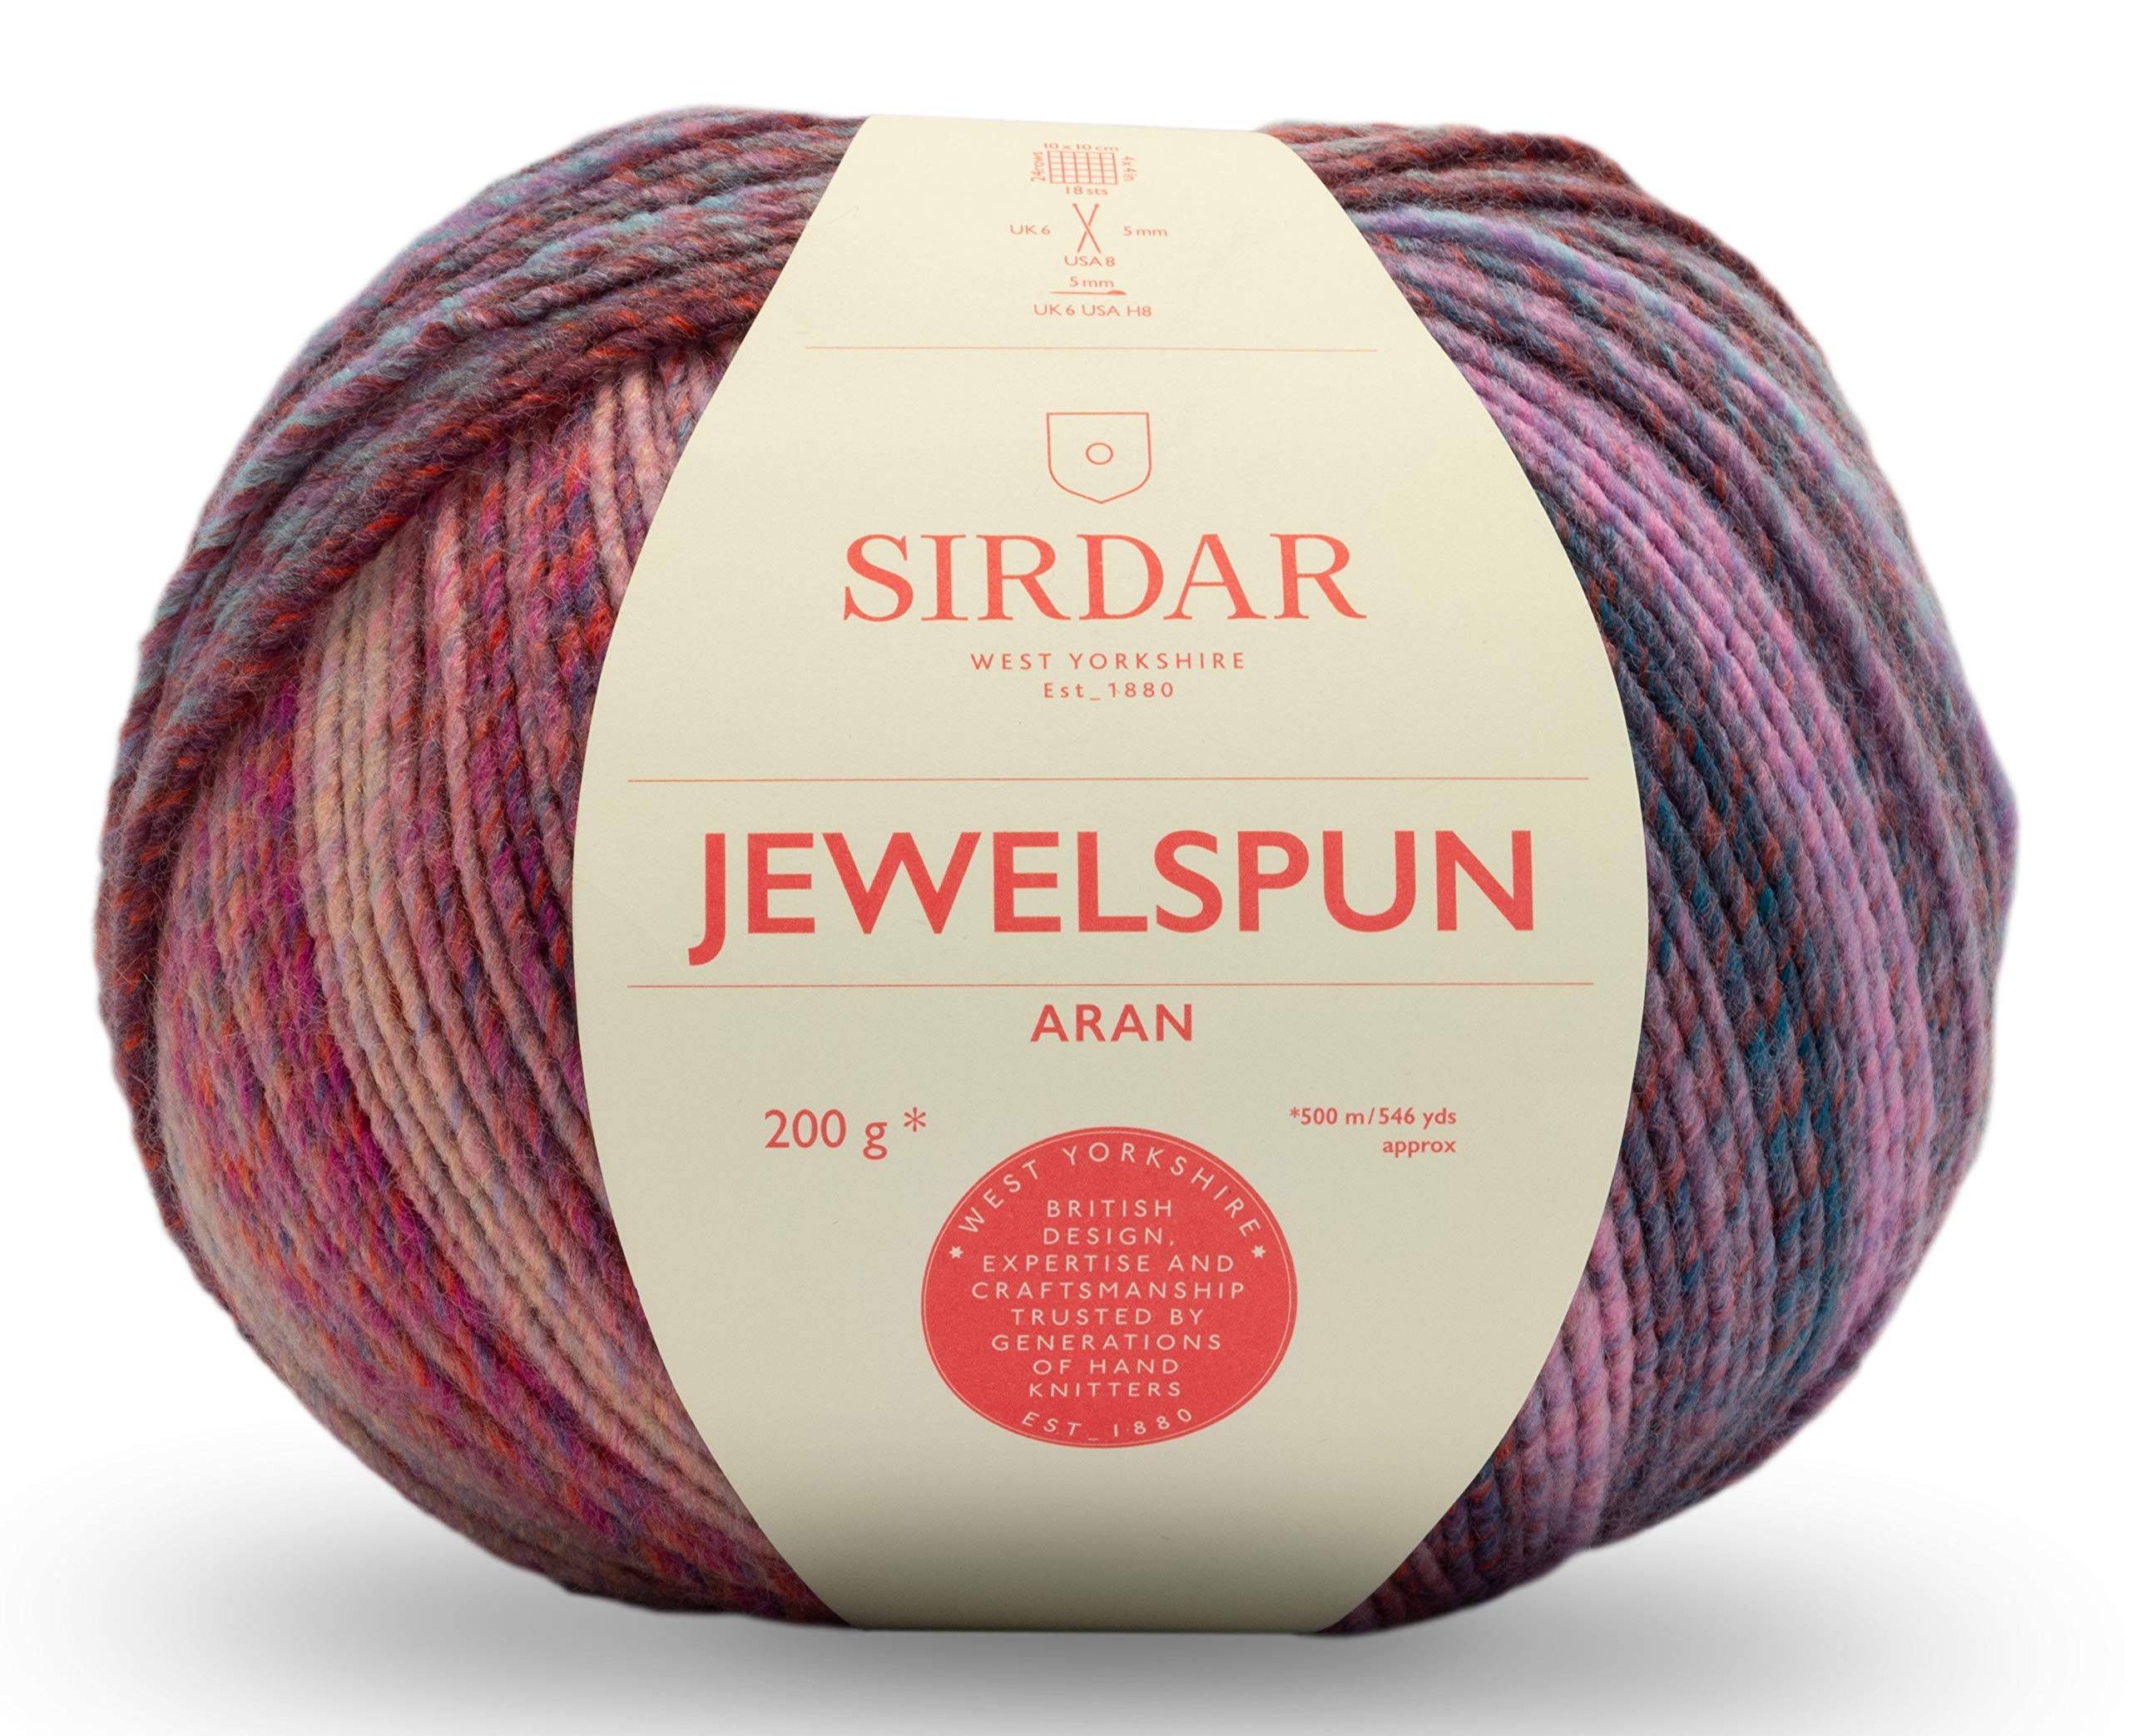 Sirdar Jewelspun Aran Yarn - 844 Shade, 200g